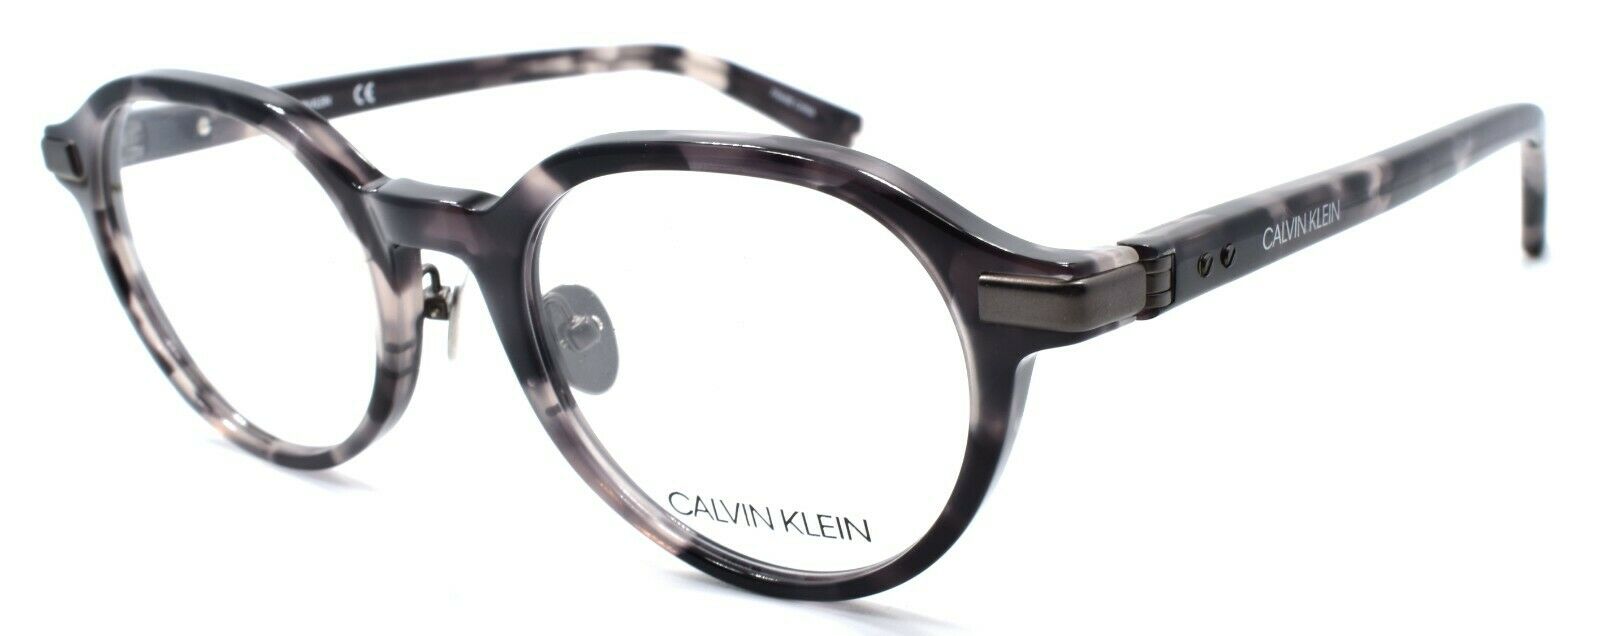 1-Calvin Klein CK20504 007 Men's Eyeglasses Frames 48-21-145 Charcoal Tortoise-883901122930-IKSpecs